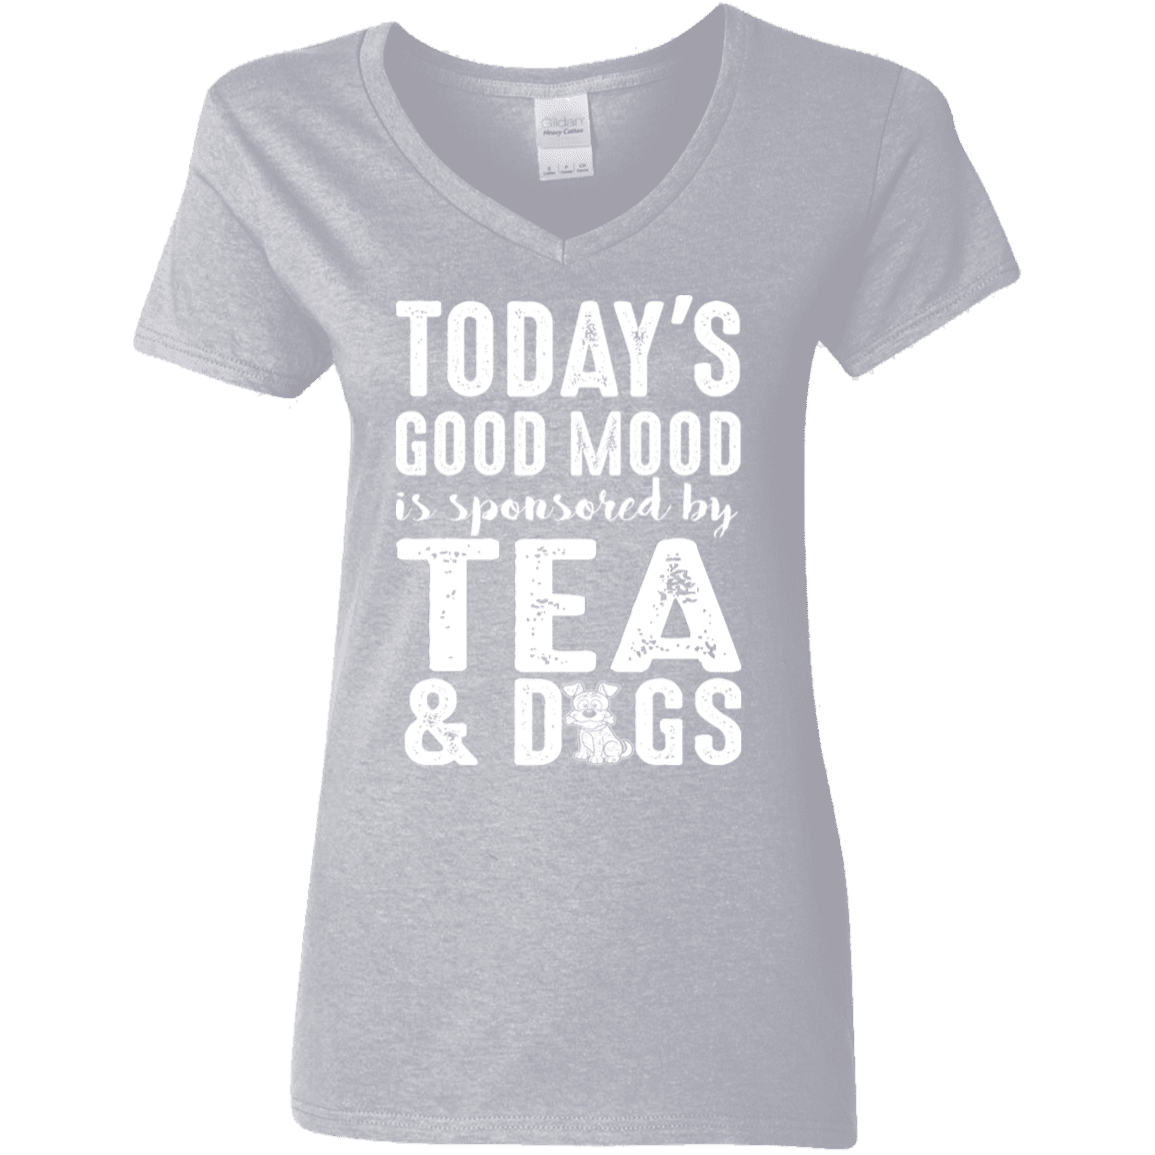 Today's Good Mood Tea & Dogs - Ladies V Neck.